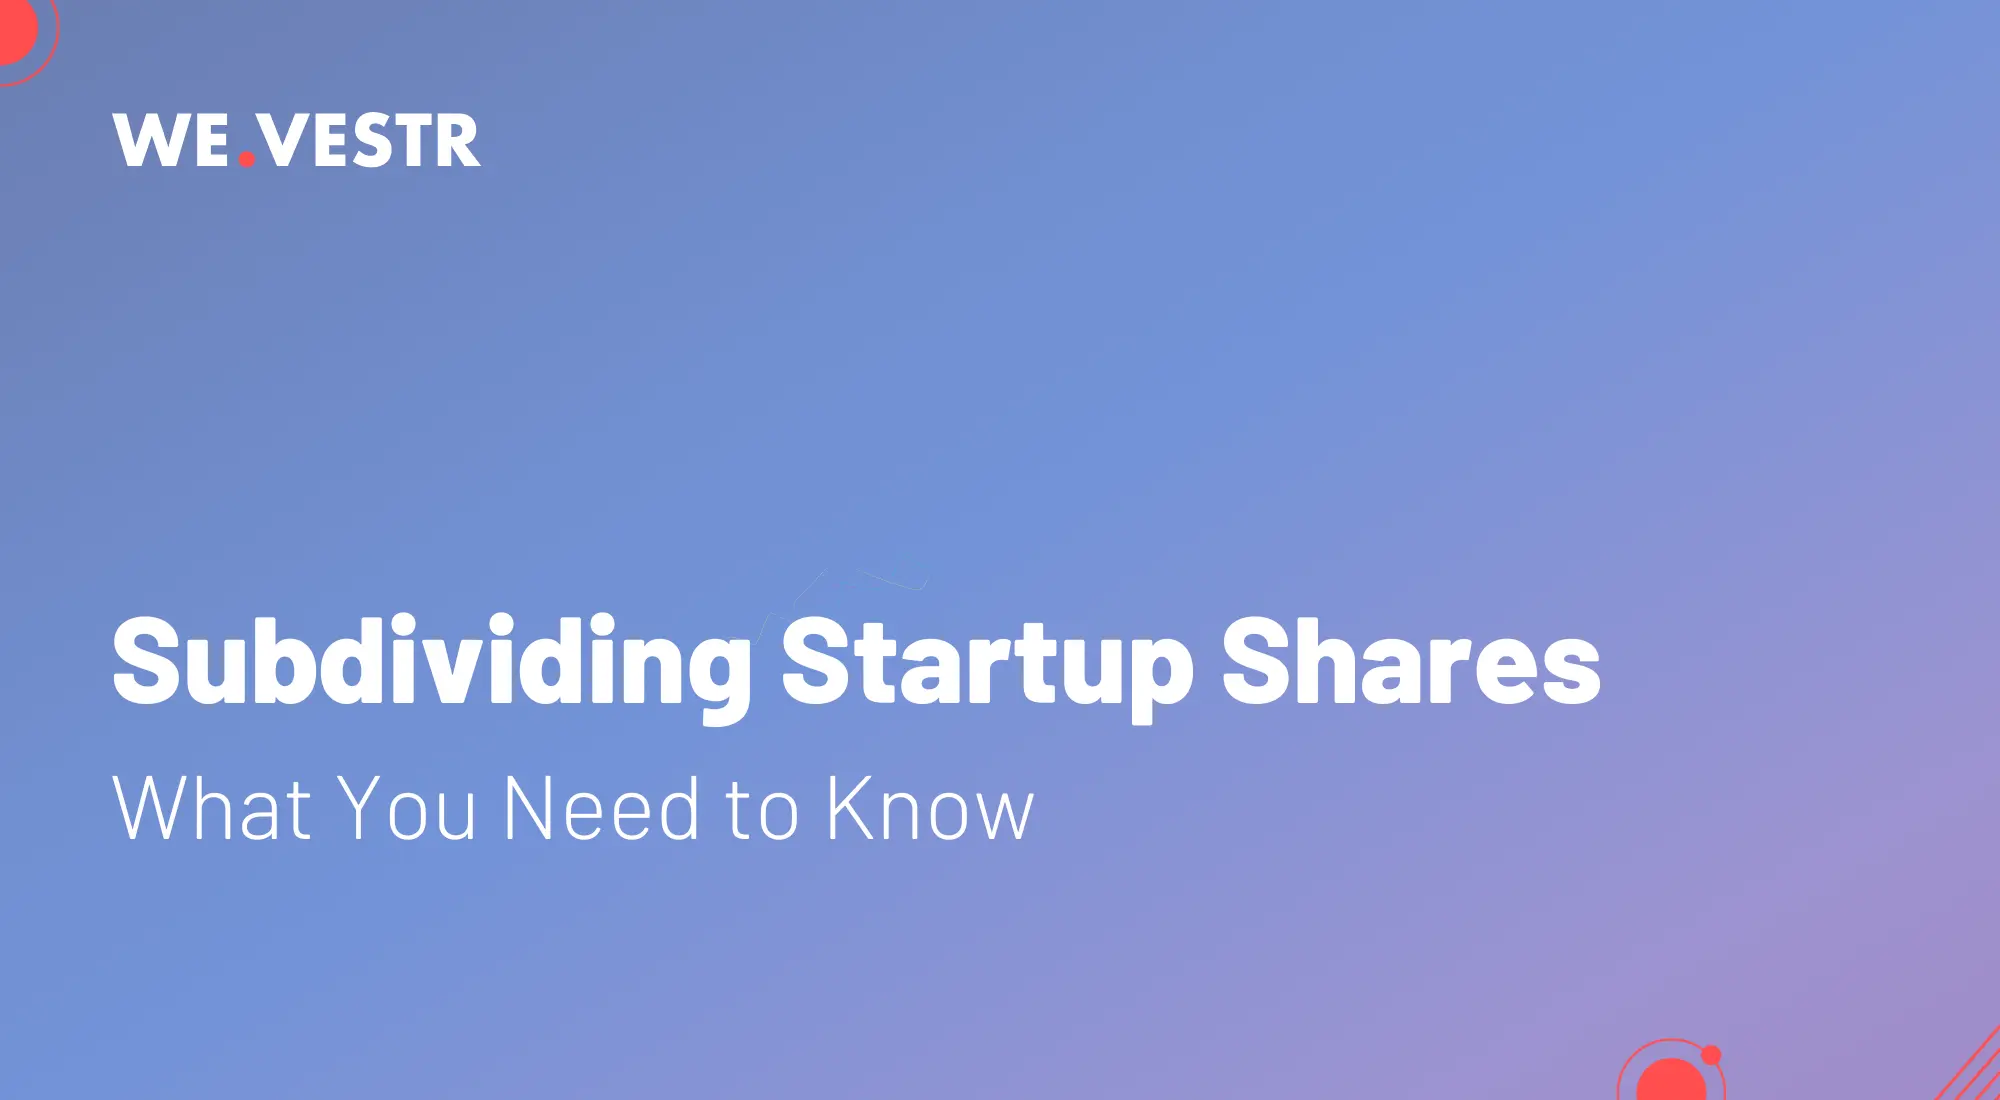 WE.VESTR - A guide to subdividing startup shares